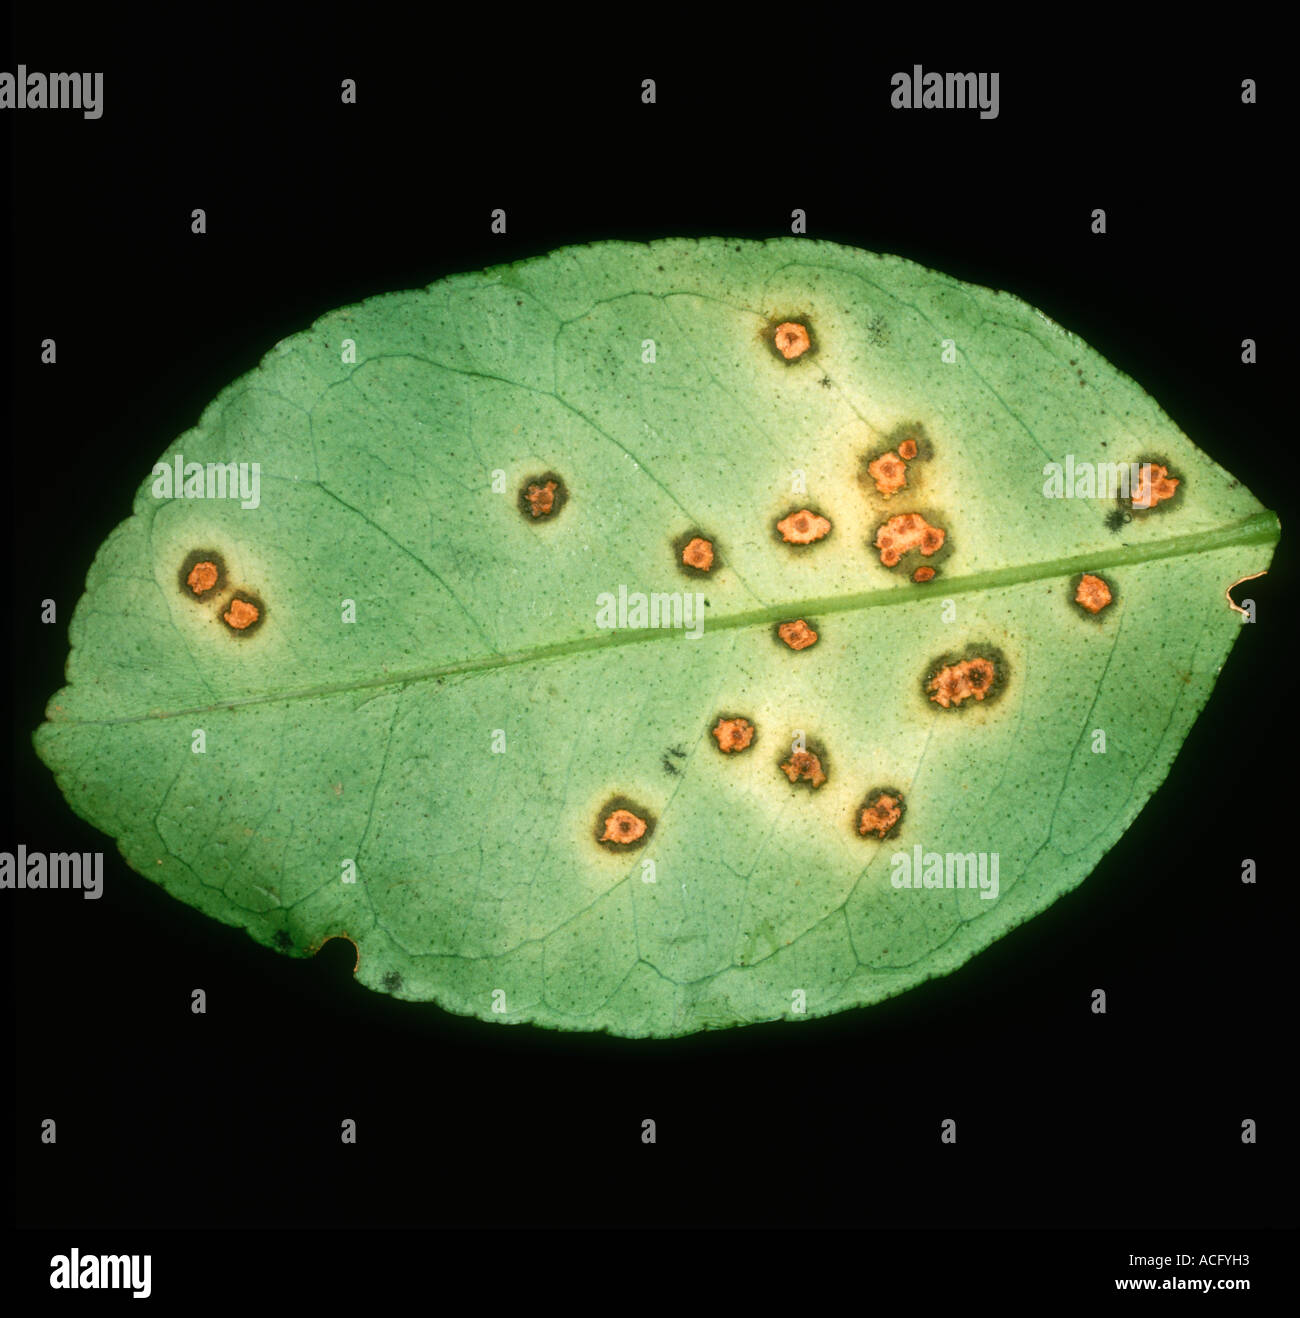 Bacterial canker Xanthomonas citri leaf spotting on lemon Thailand Stock Photo